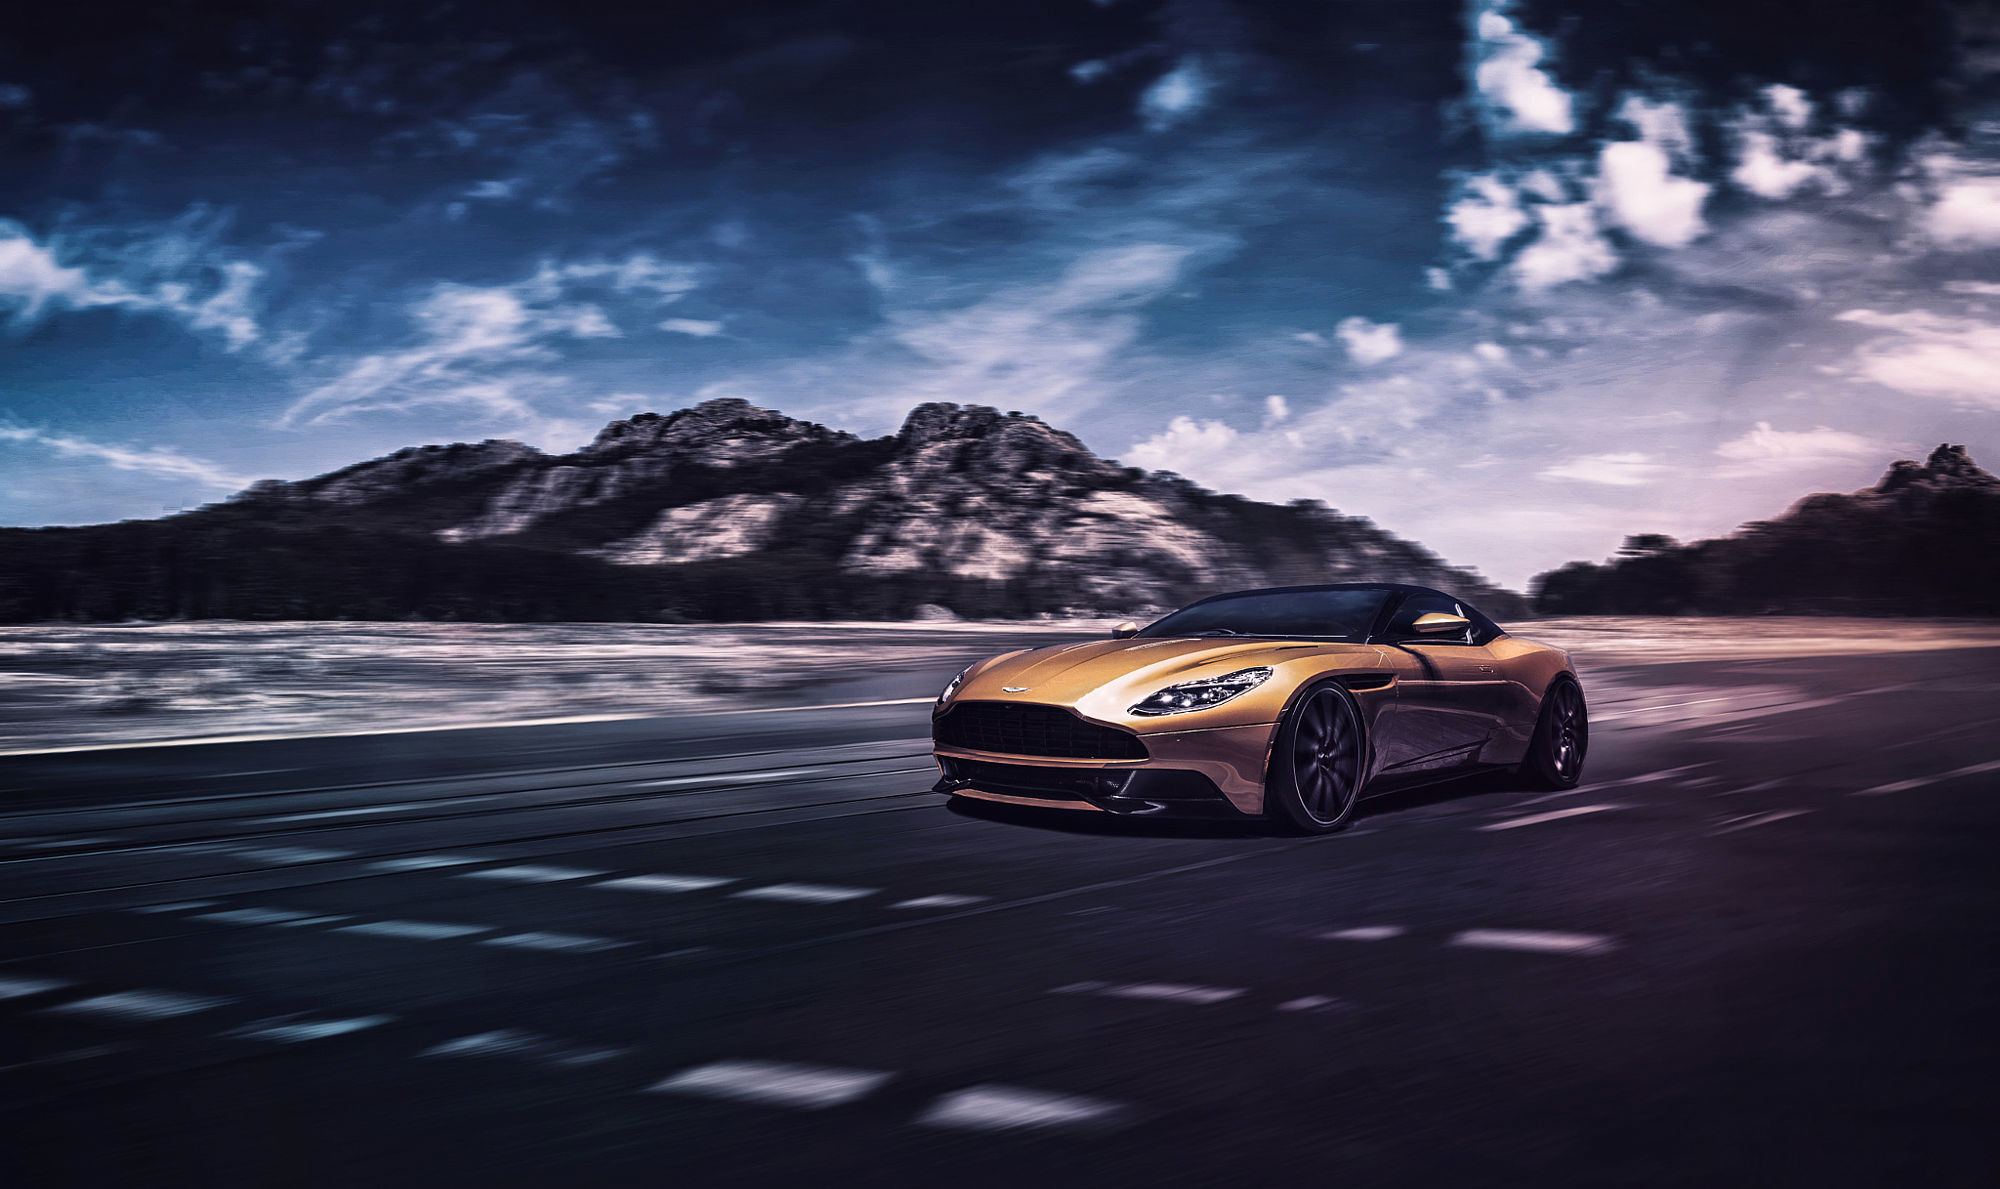 Aston Martin Db11 HD Wallpaper Background Image